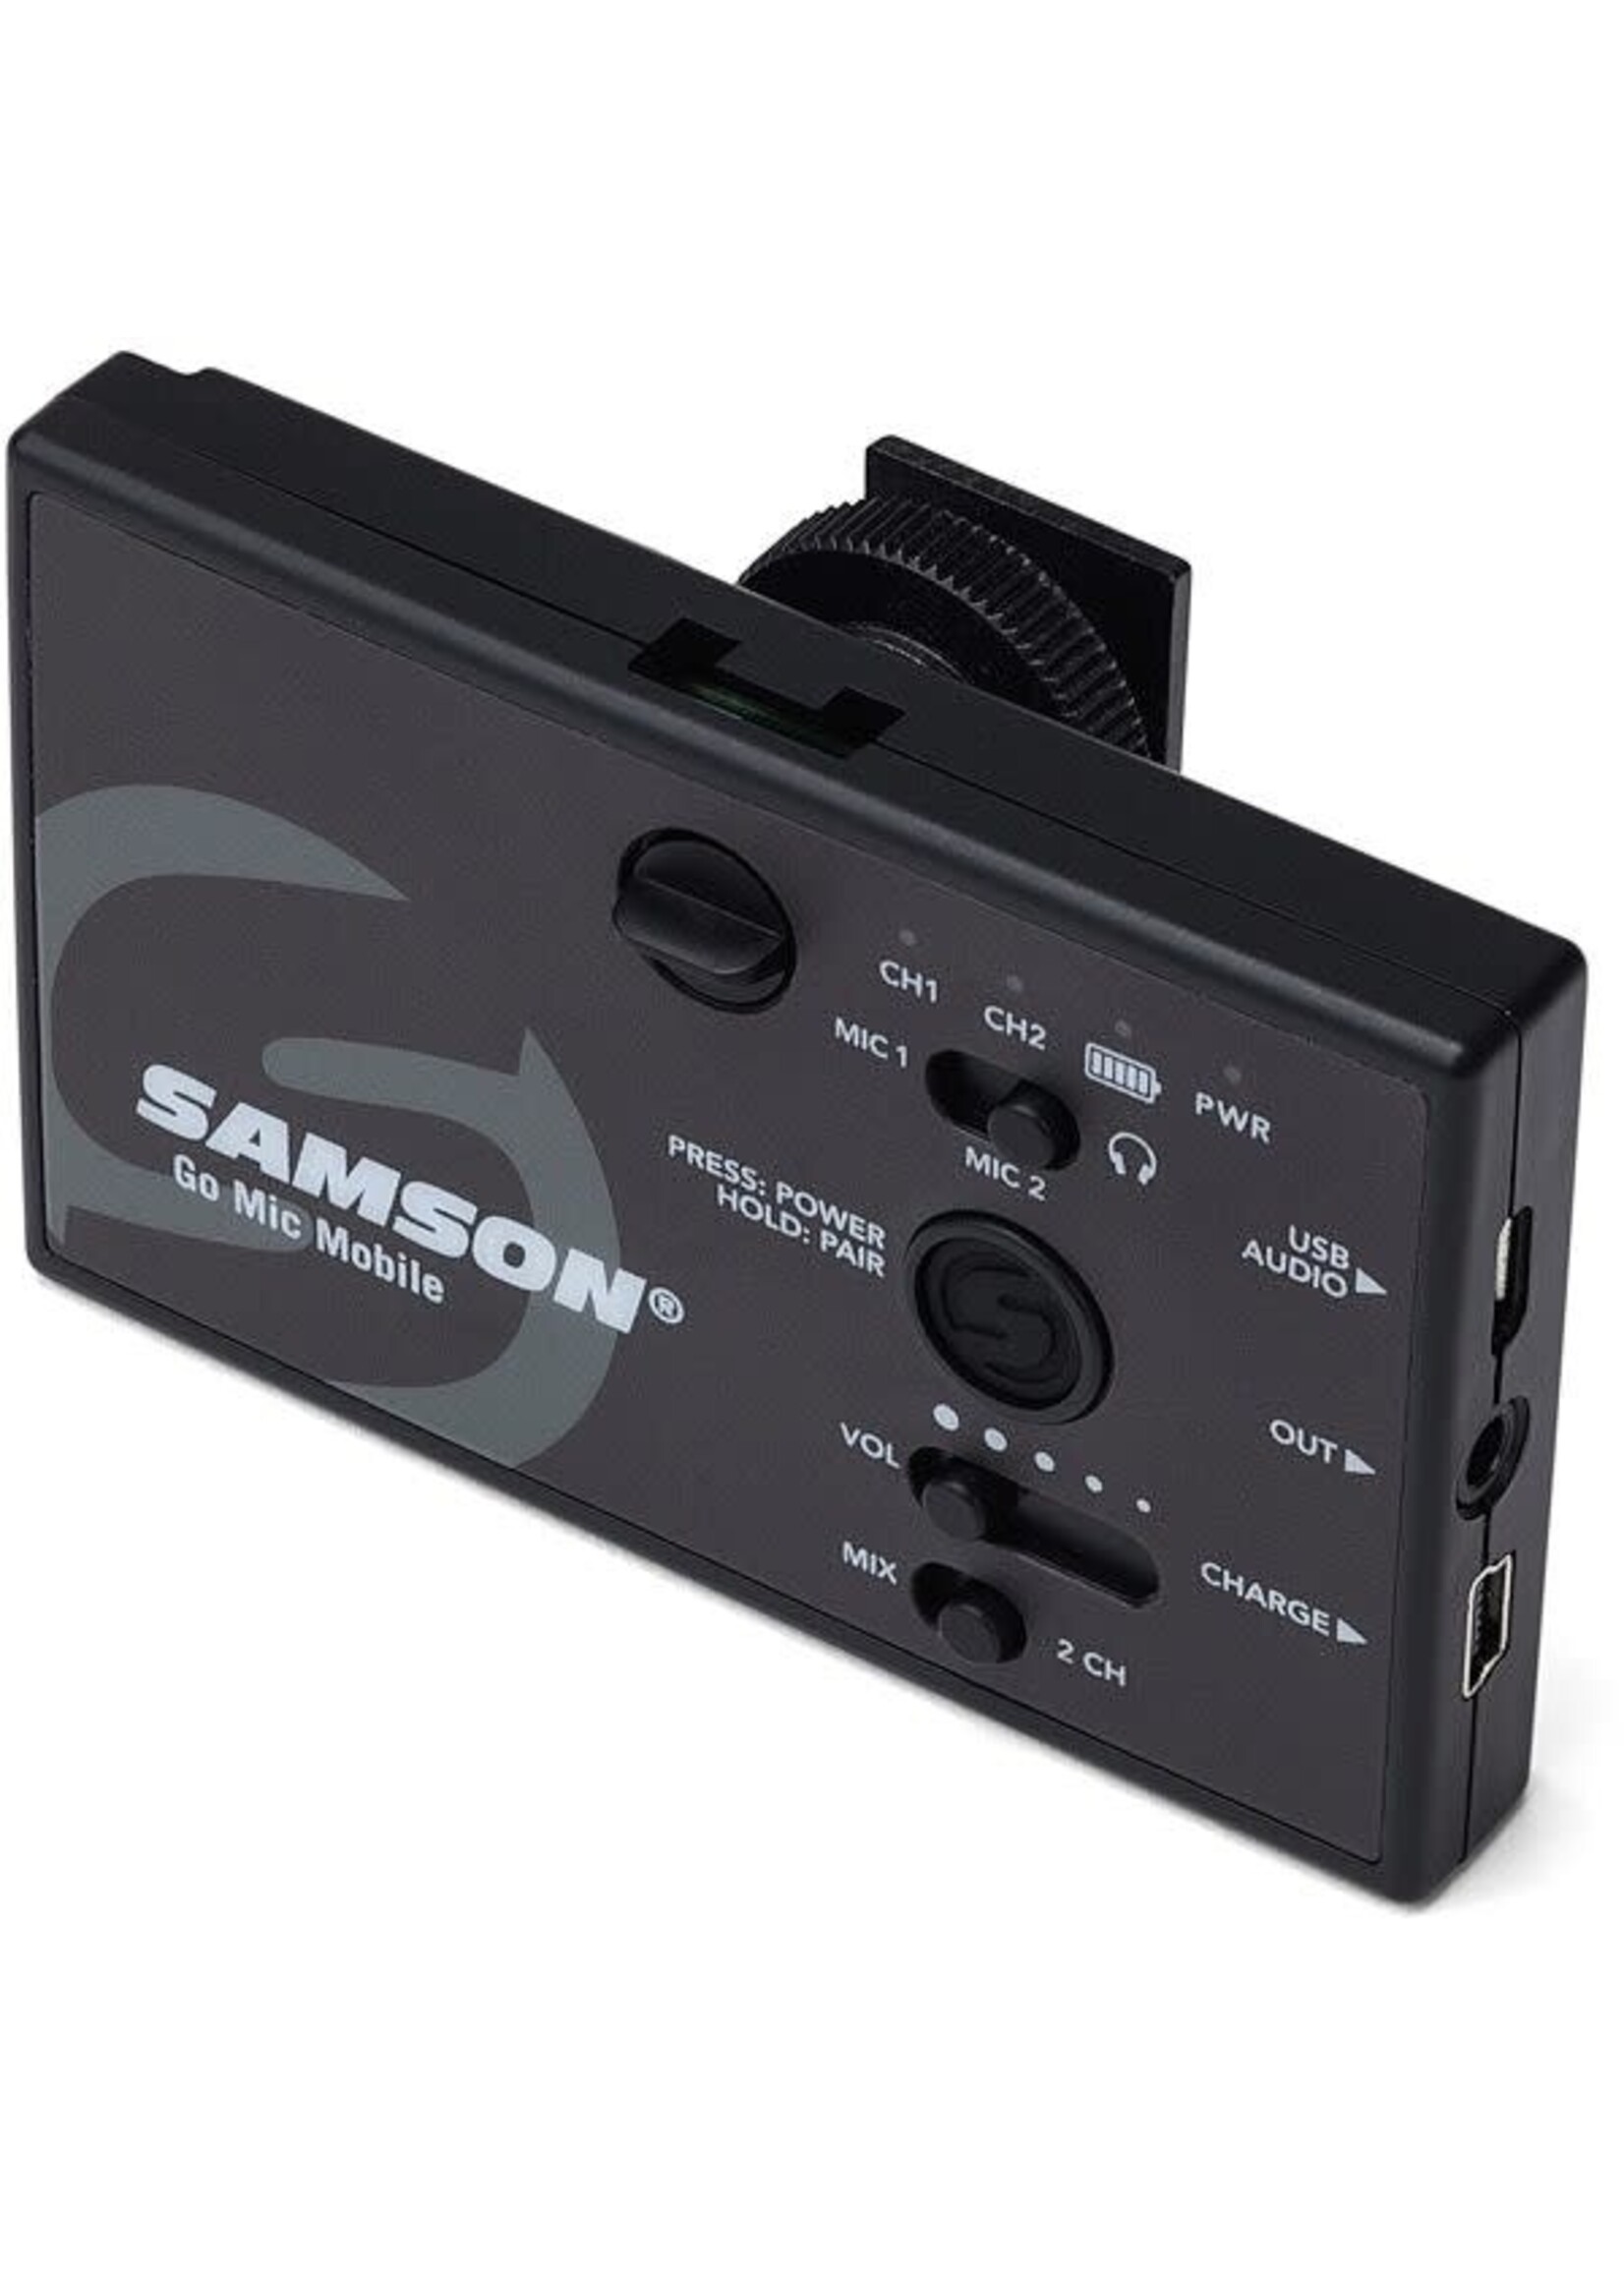 Samson Samson Go Mic Moble Wireless Lavalier Microphone System for Mobile Video